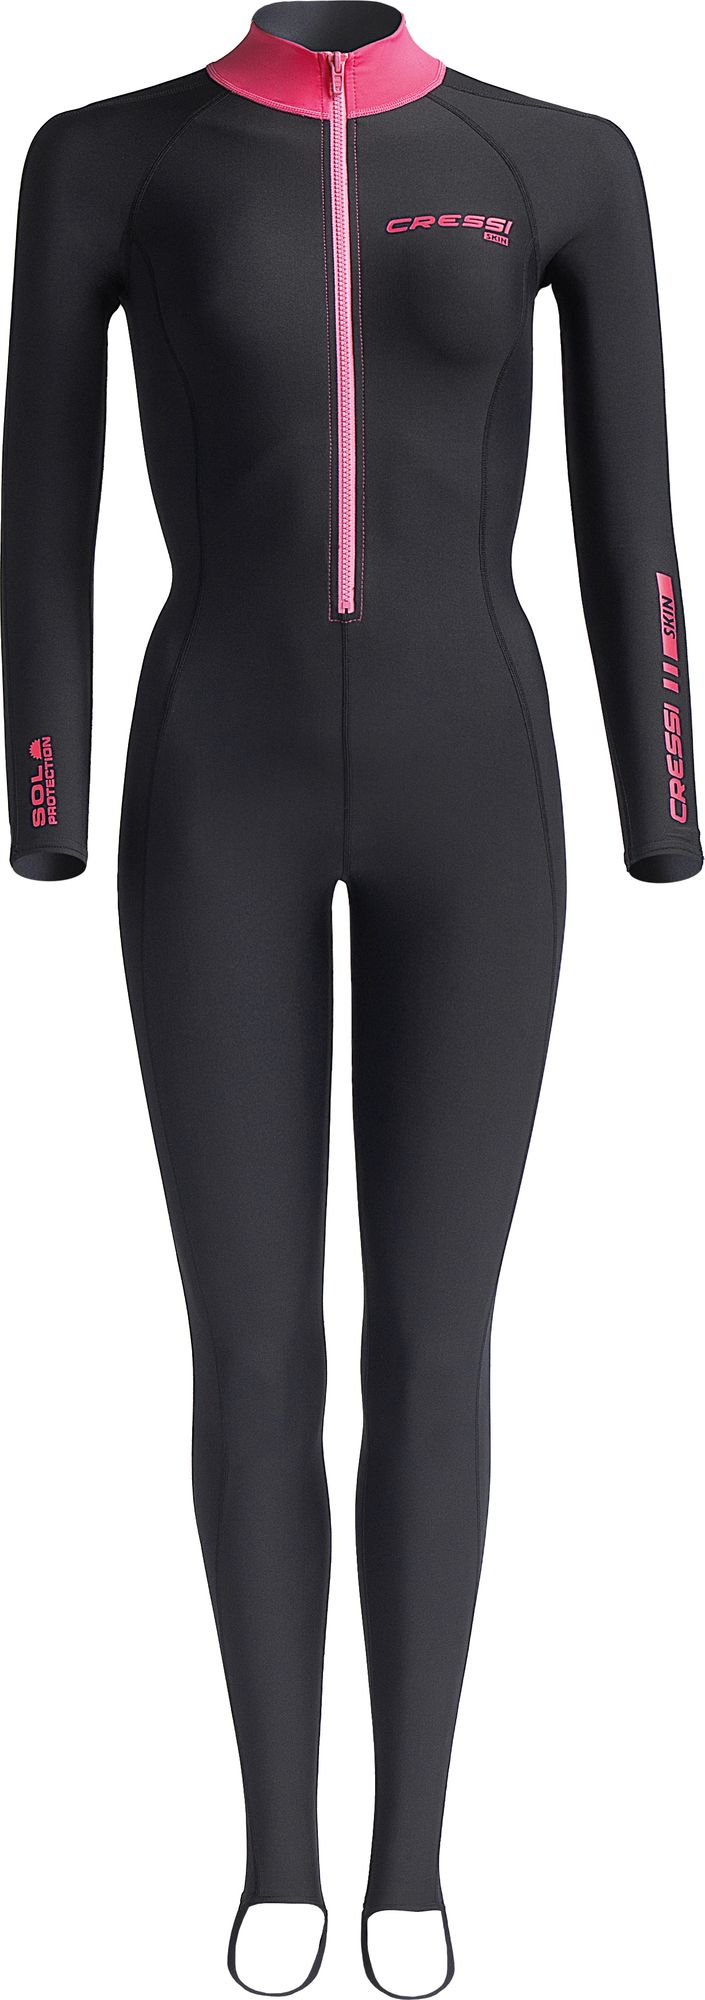 Cressi Ladies; Full Front Zip Wetsuit for Swimming, Snorkeling, Scuba